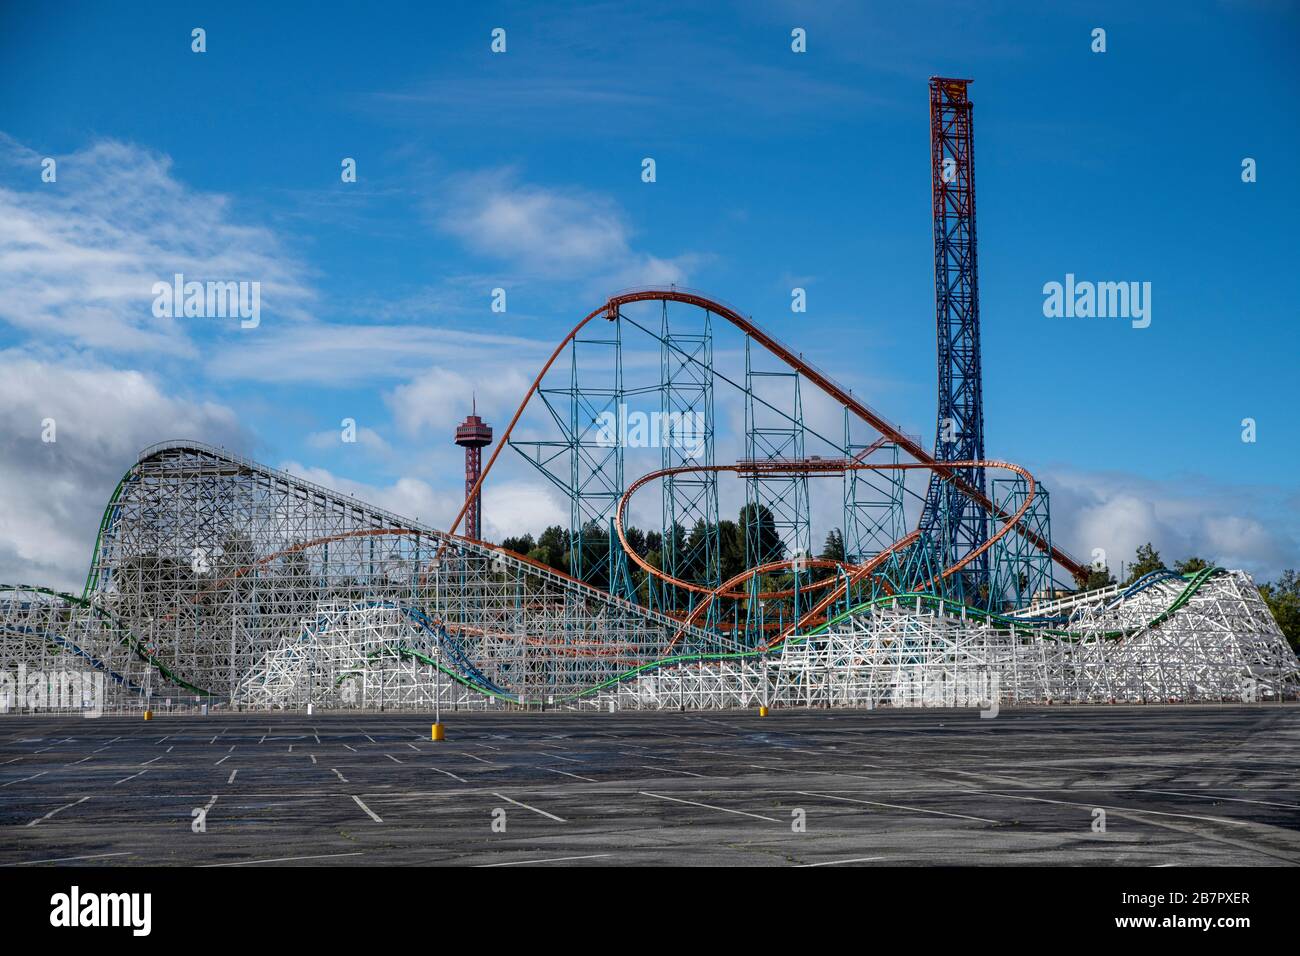 Santa Clarita, California USA March 16, 2020: Six Flags Magic Mountain Valencia, parking lot empty and rides closed. Stock Photo